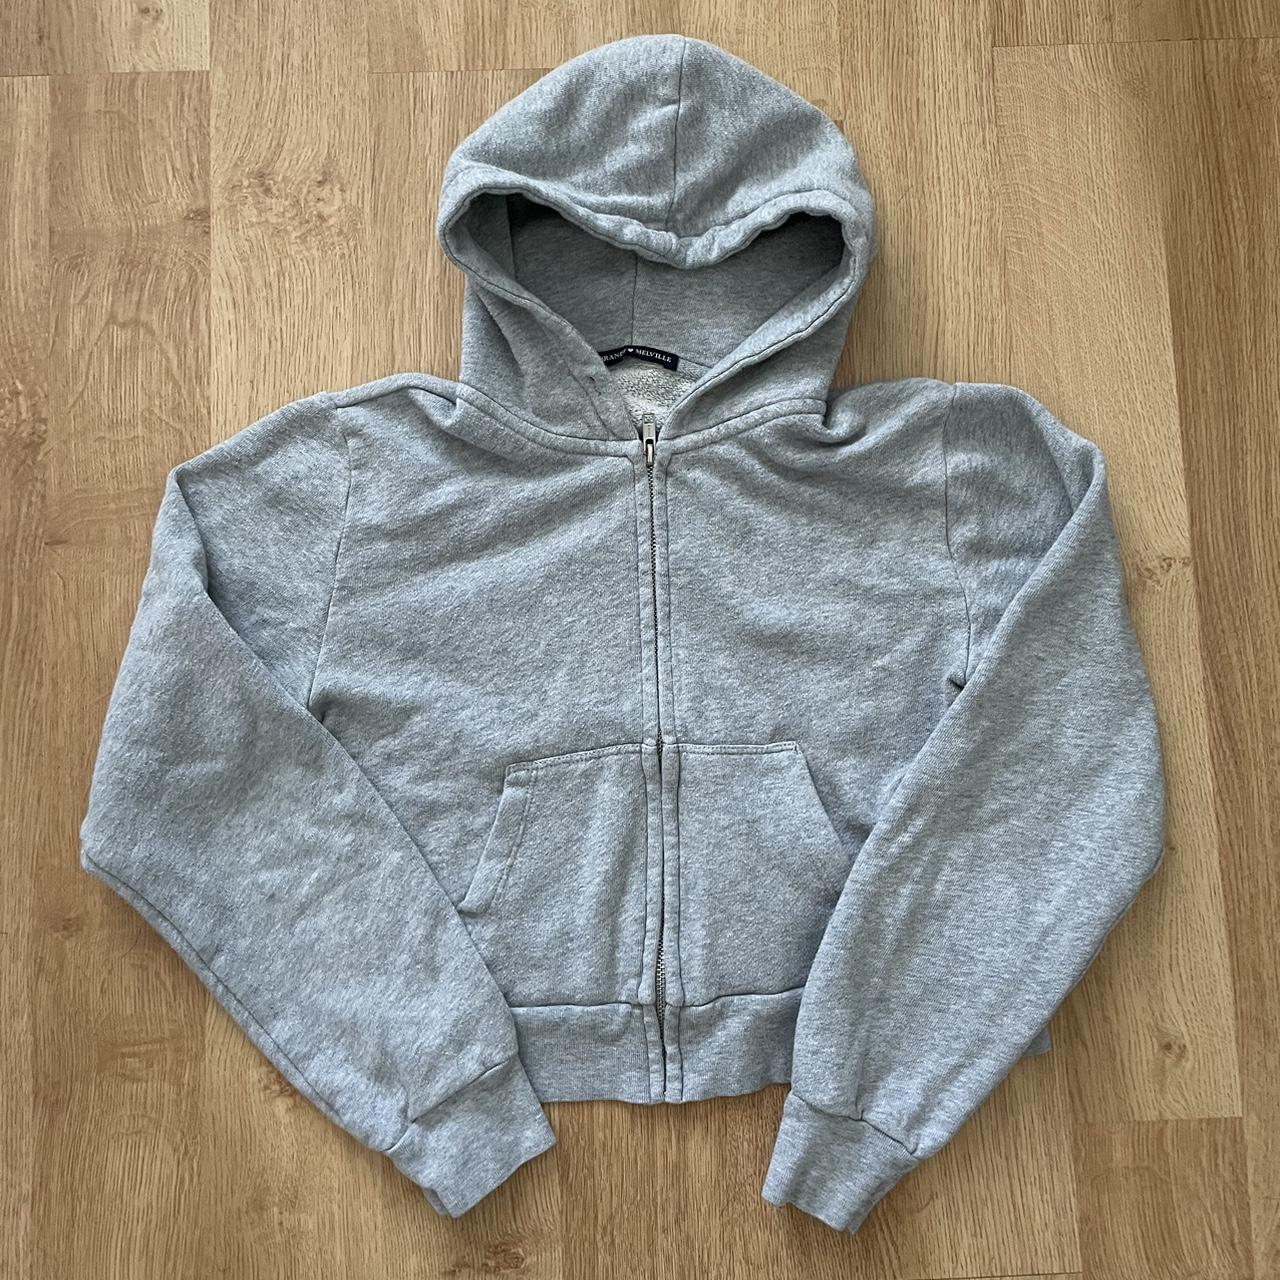 Brandy Melville grey cropped zip up sweater - one - Depop